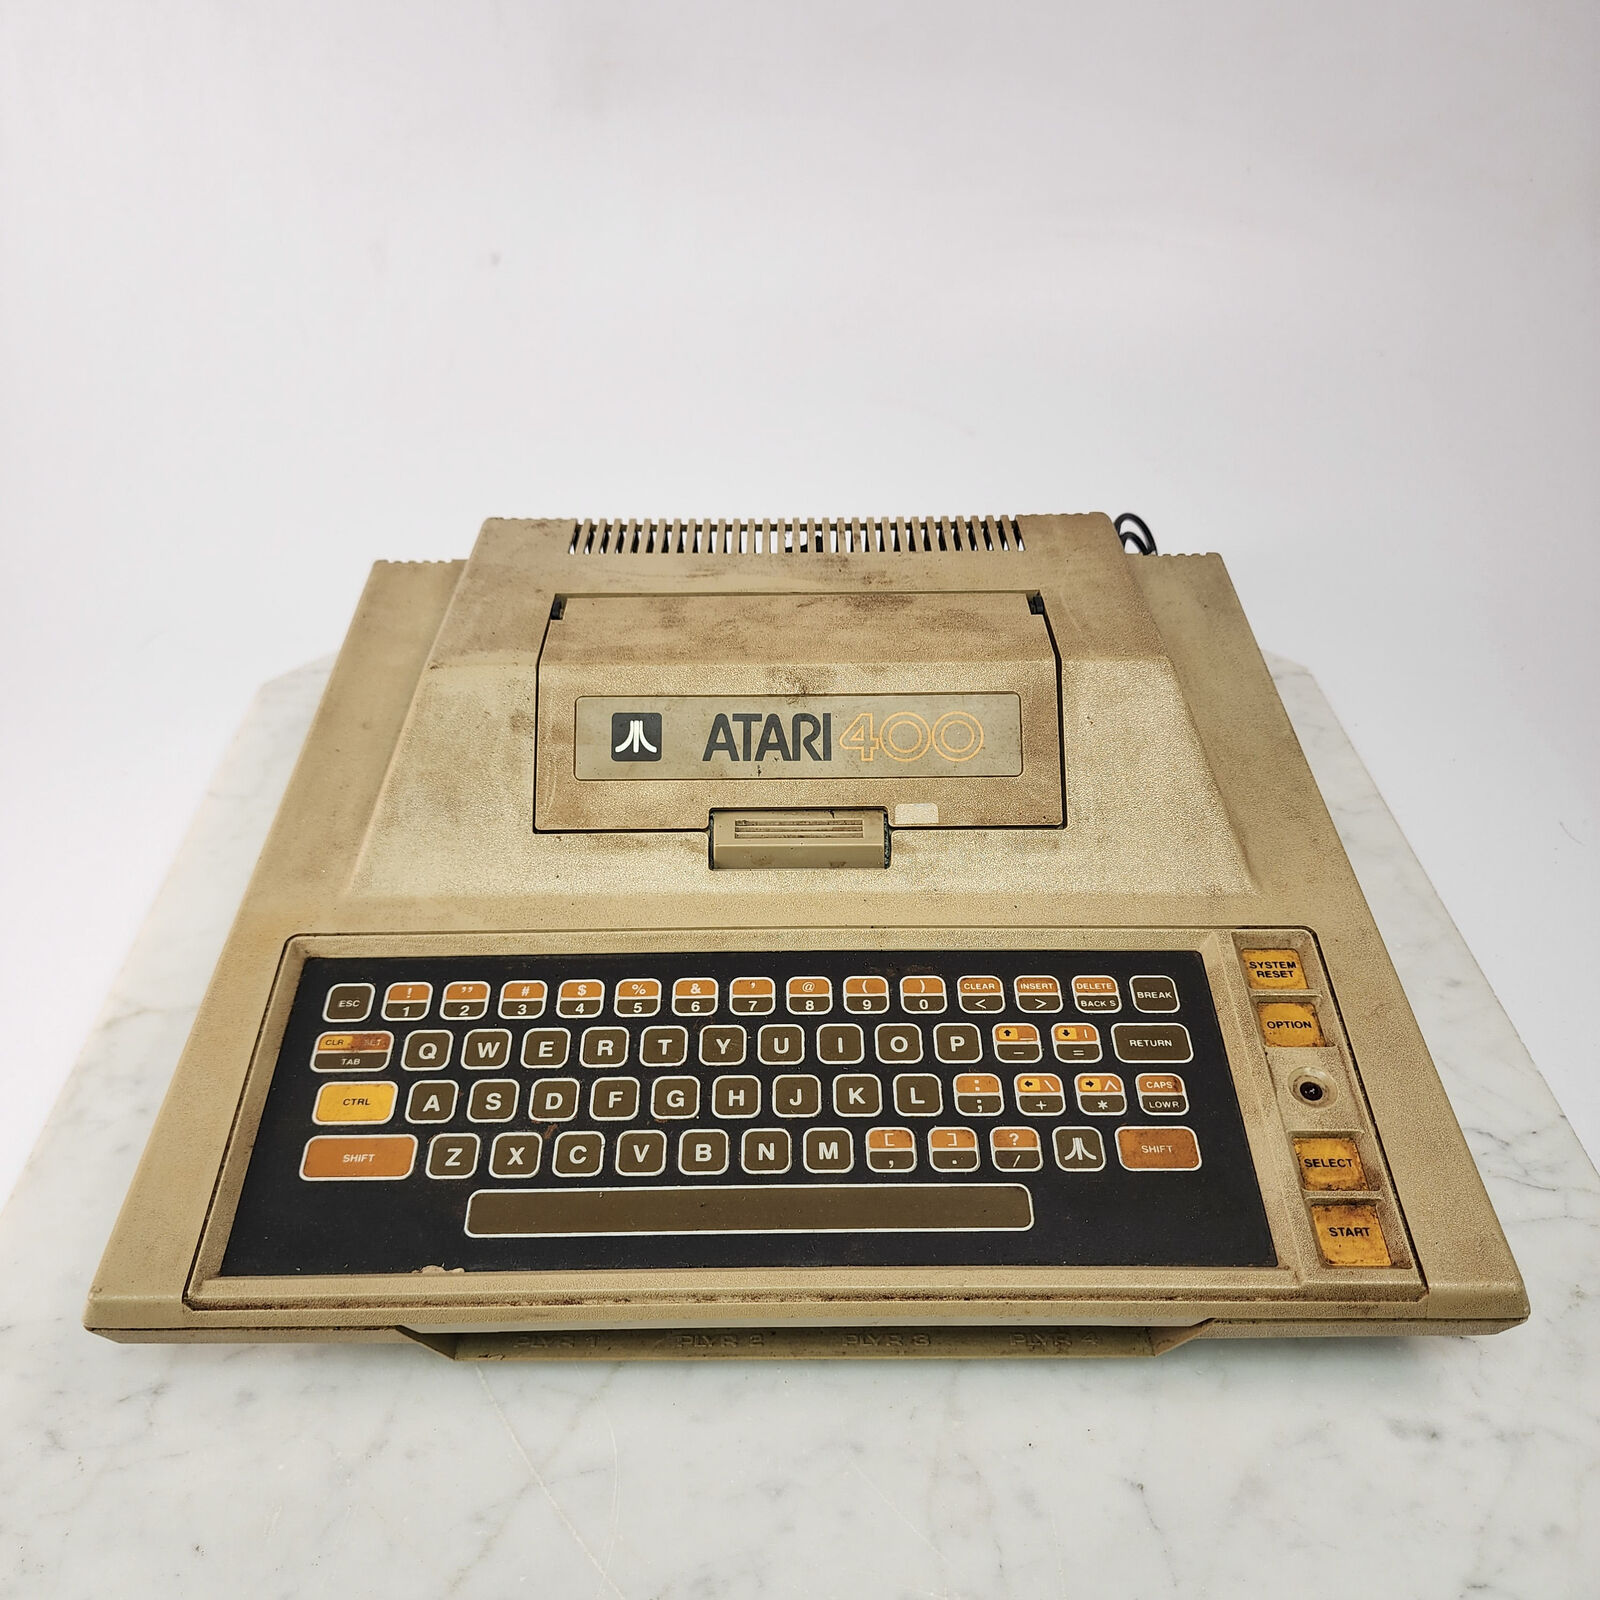 Vintage Atari 400 Computer - Classic Retro Gaming System - Rare Collectible Find